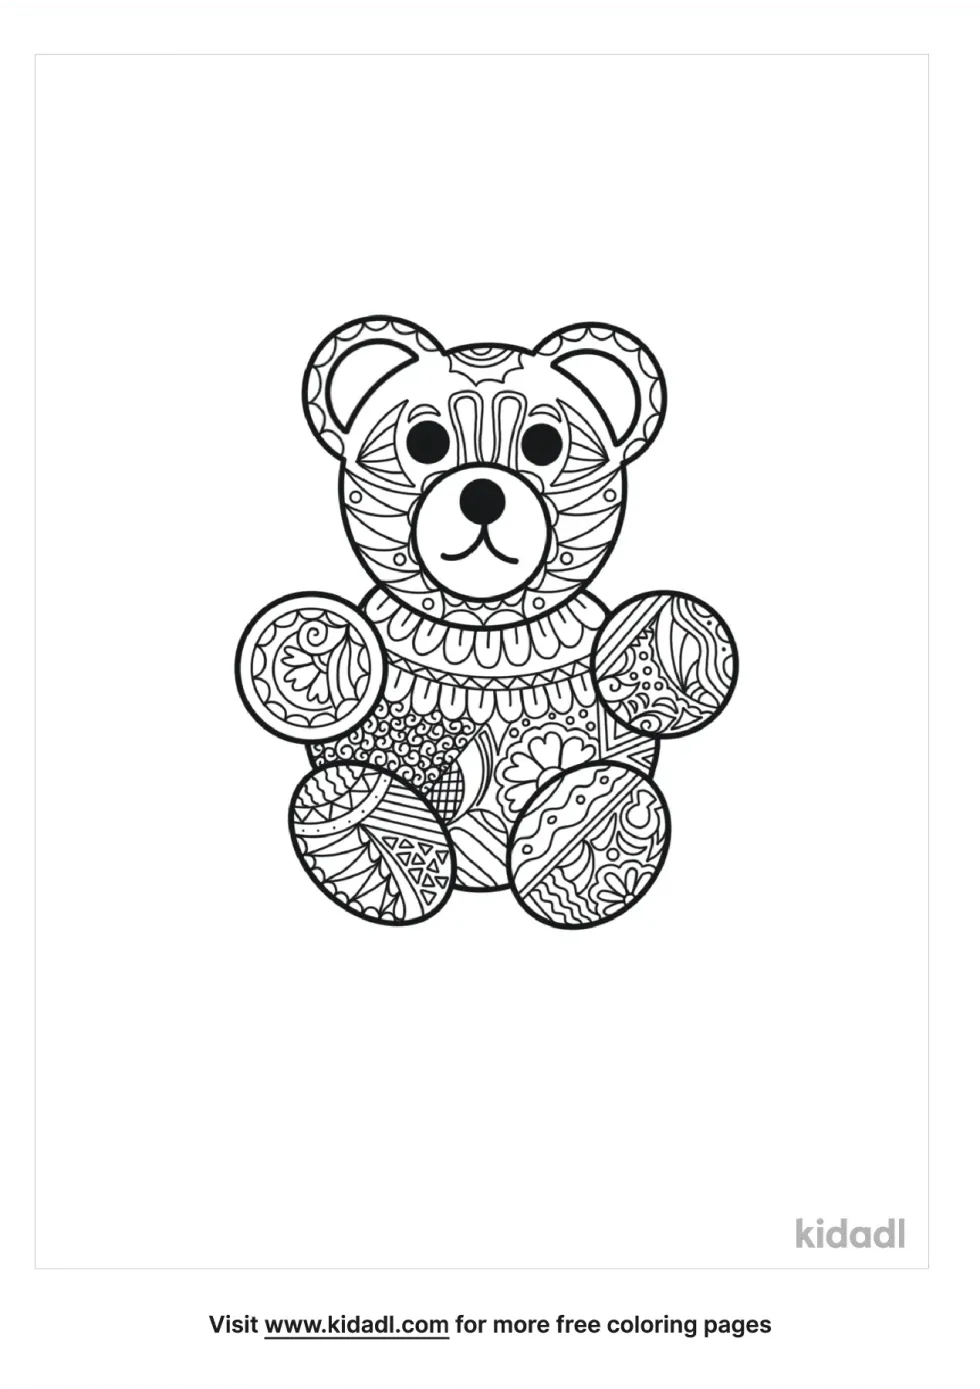 Teddy Bear Doodle | Kidadl